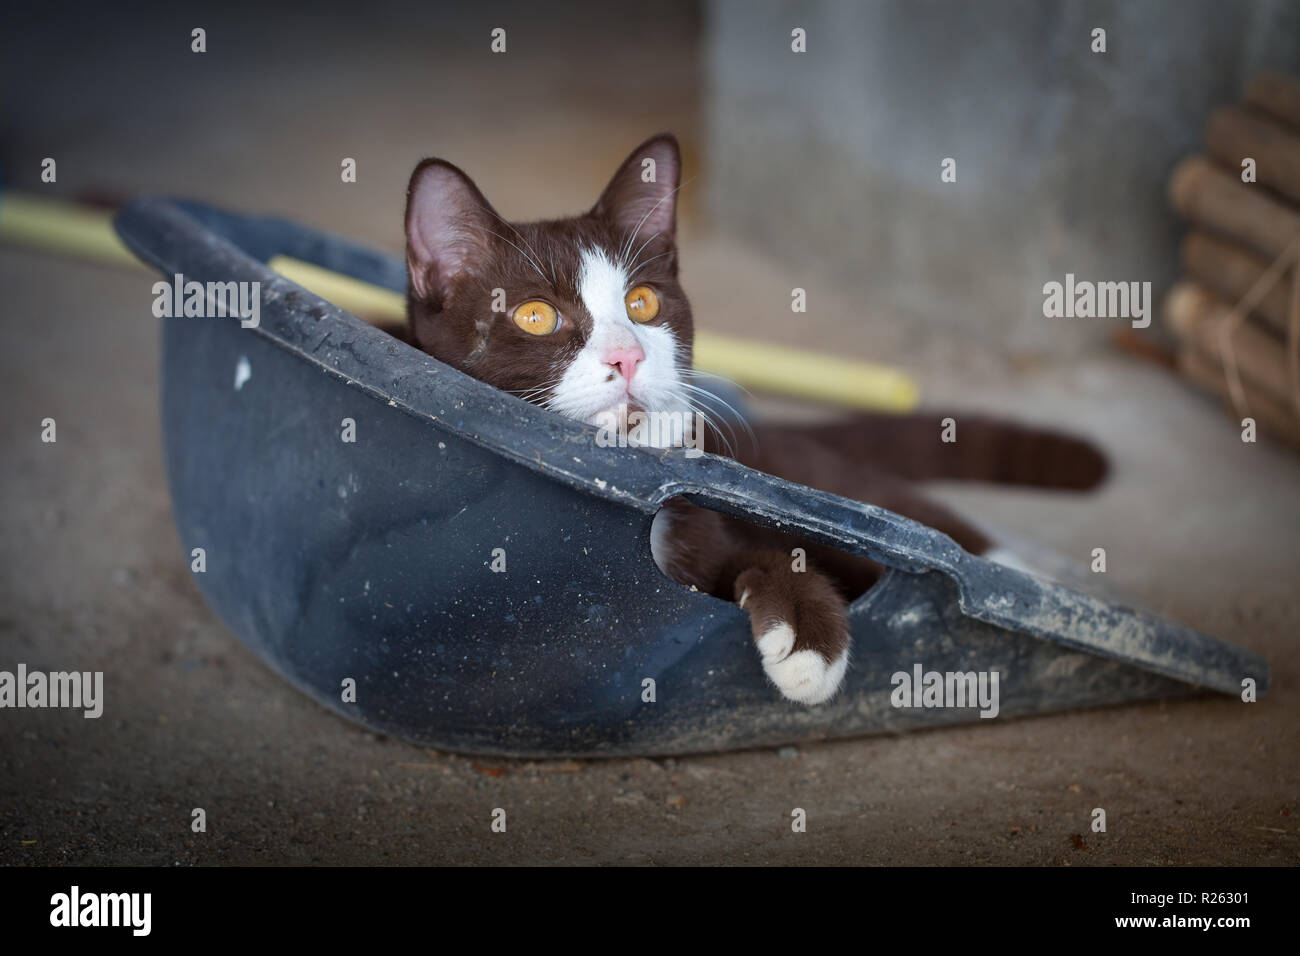 cat in dustbin Stock Photo - Alamy